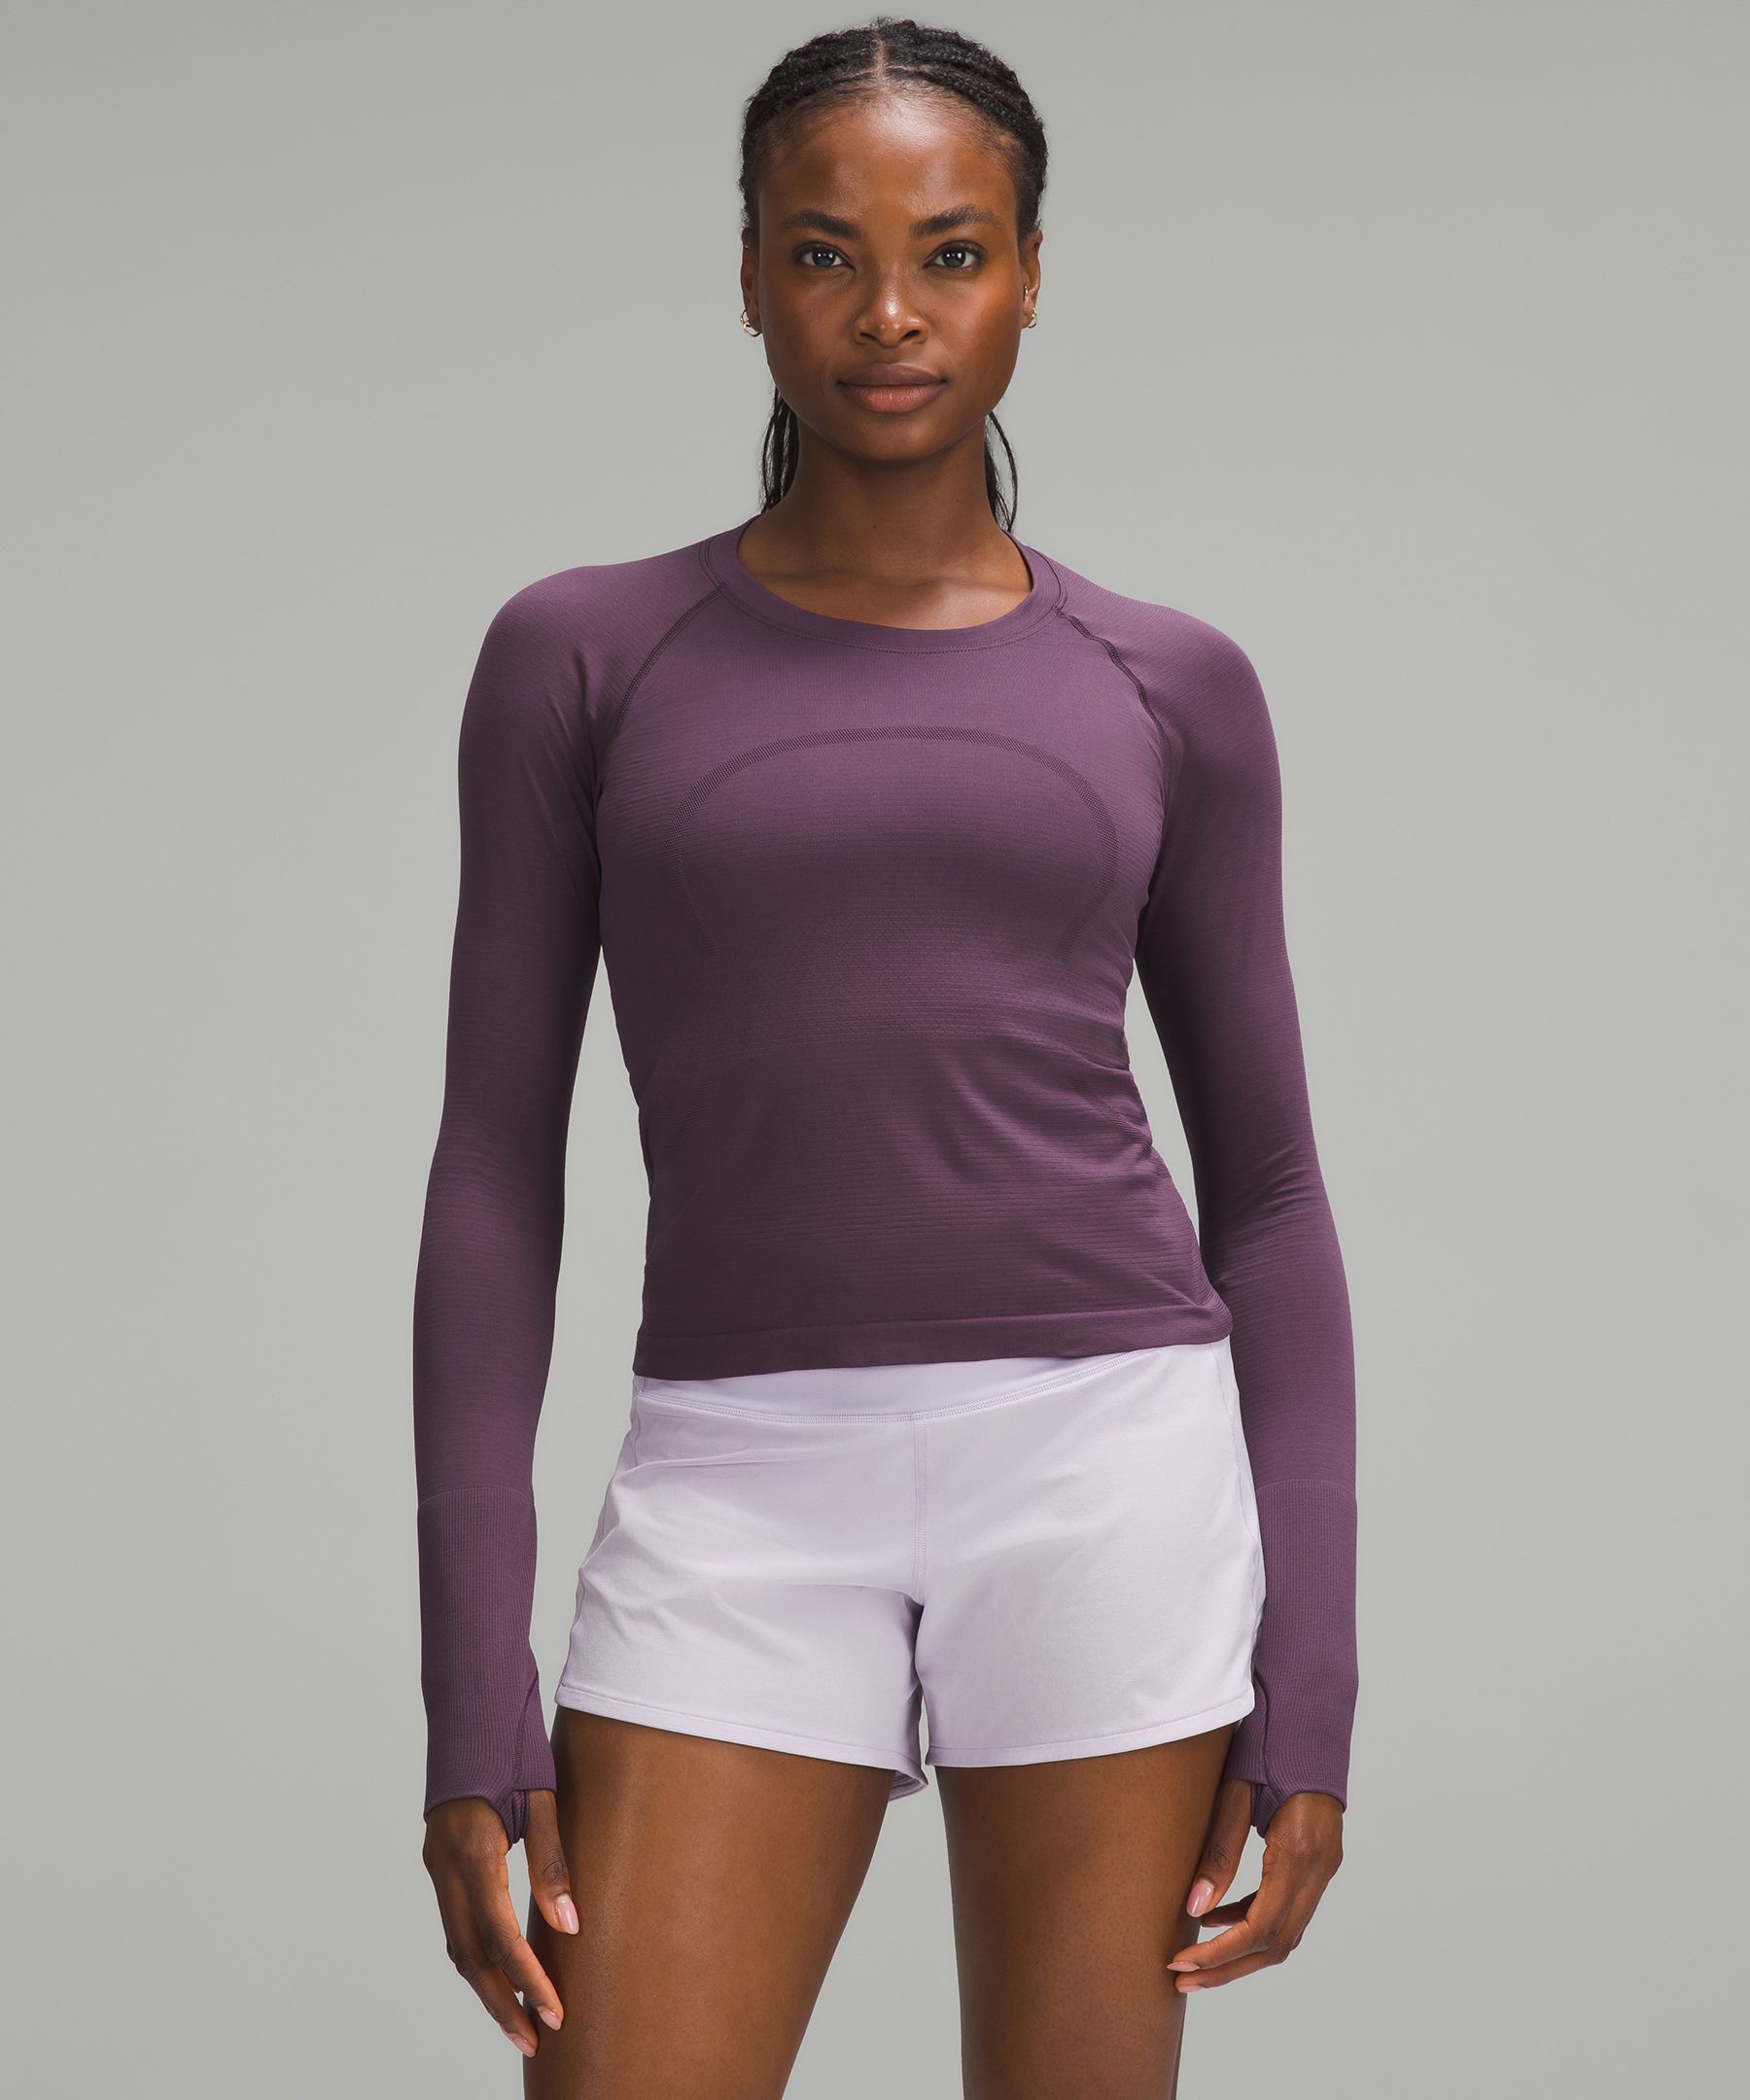 Lululemon Swiftly Tech Long Sleeve Shirt 2.0 *Race Length - 132158139